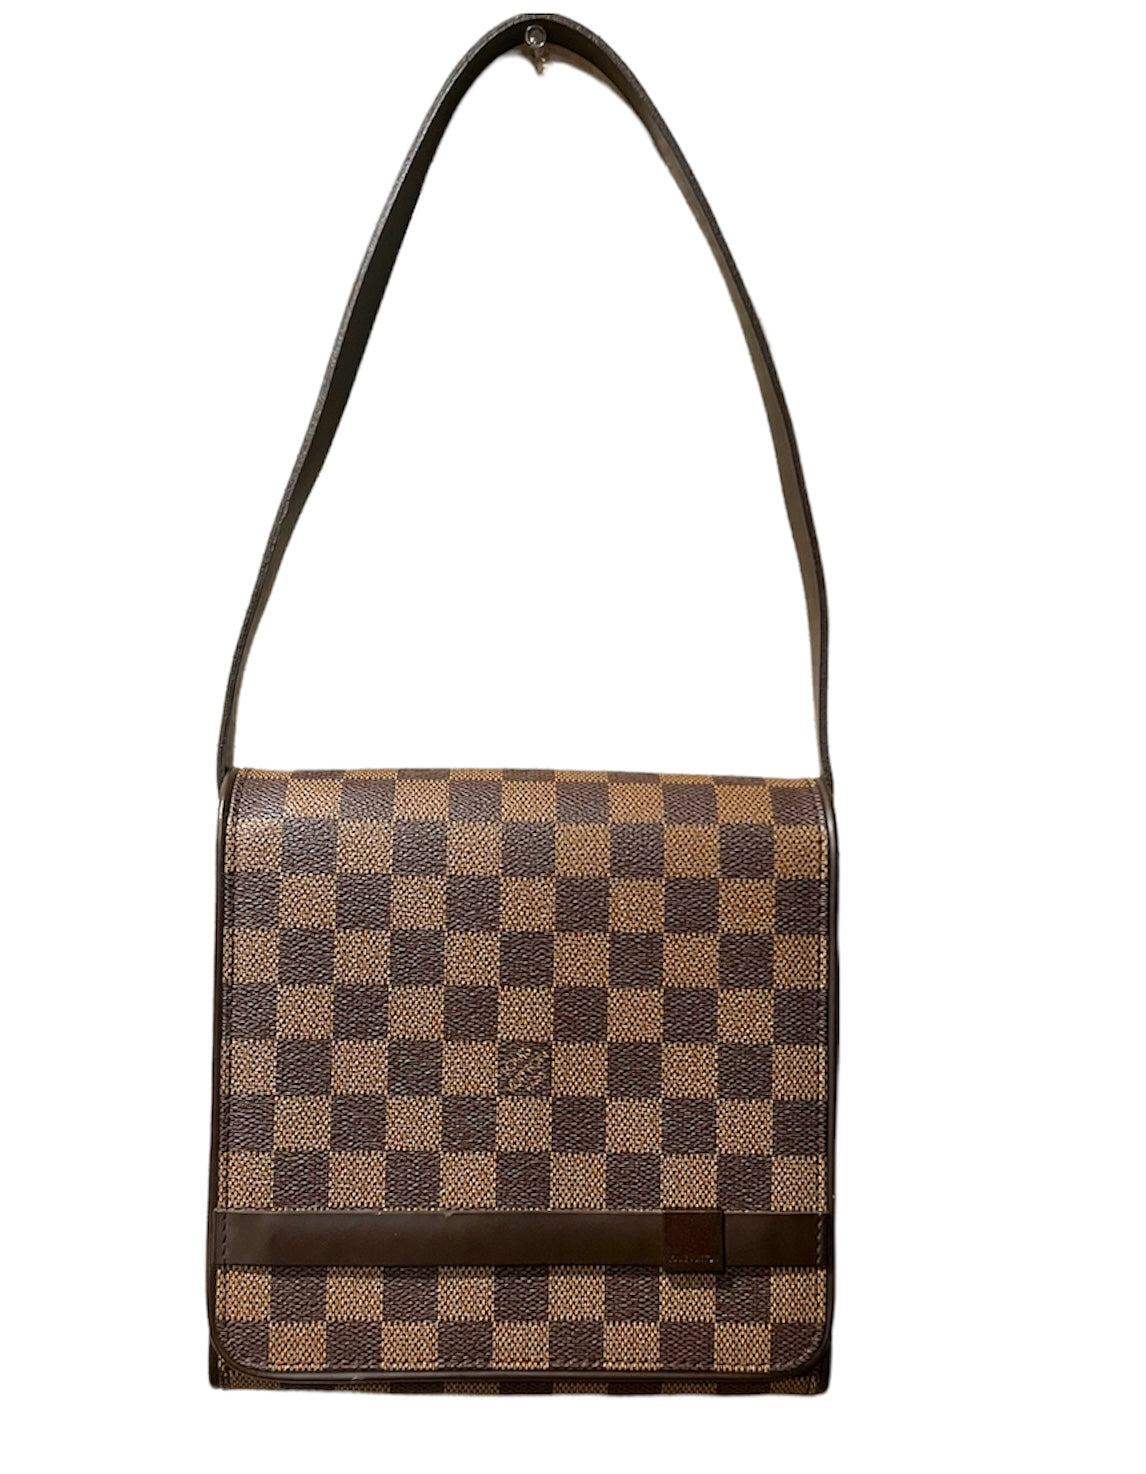 Louis Vuitton Messenger Shoulder Bag in Ebene Damier Canvas and